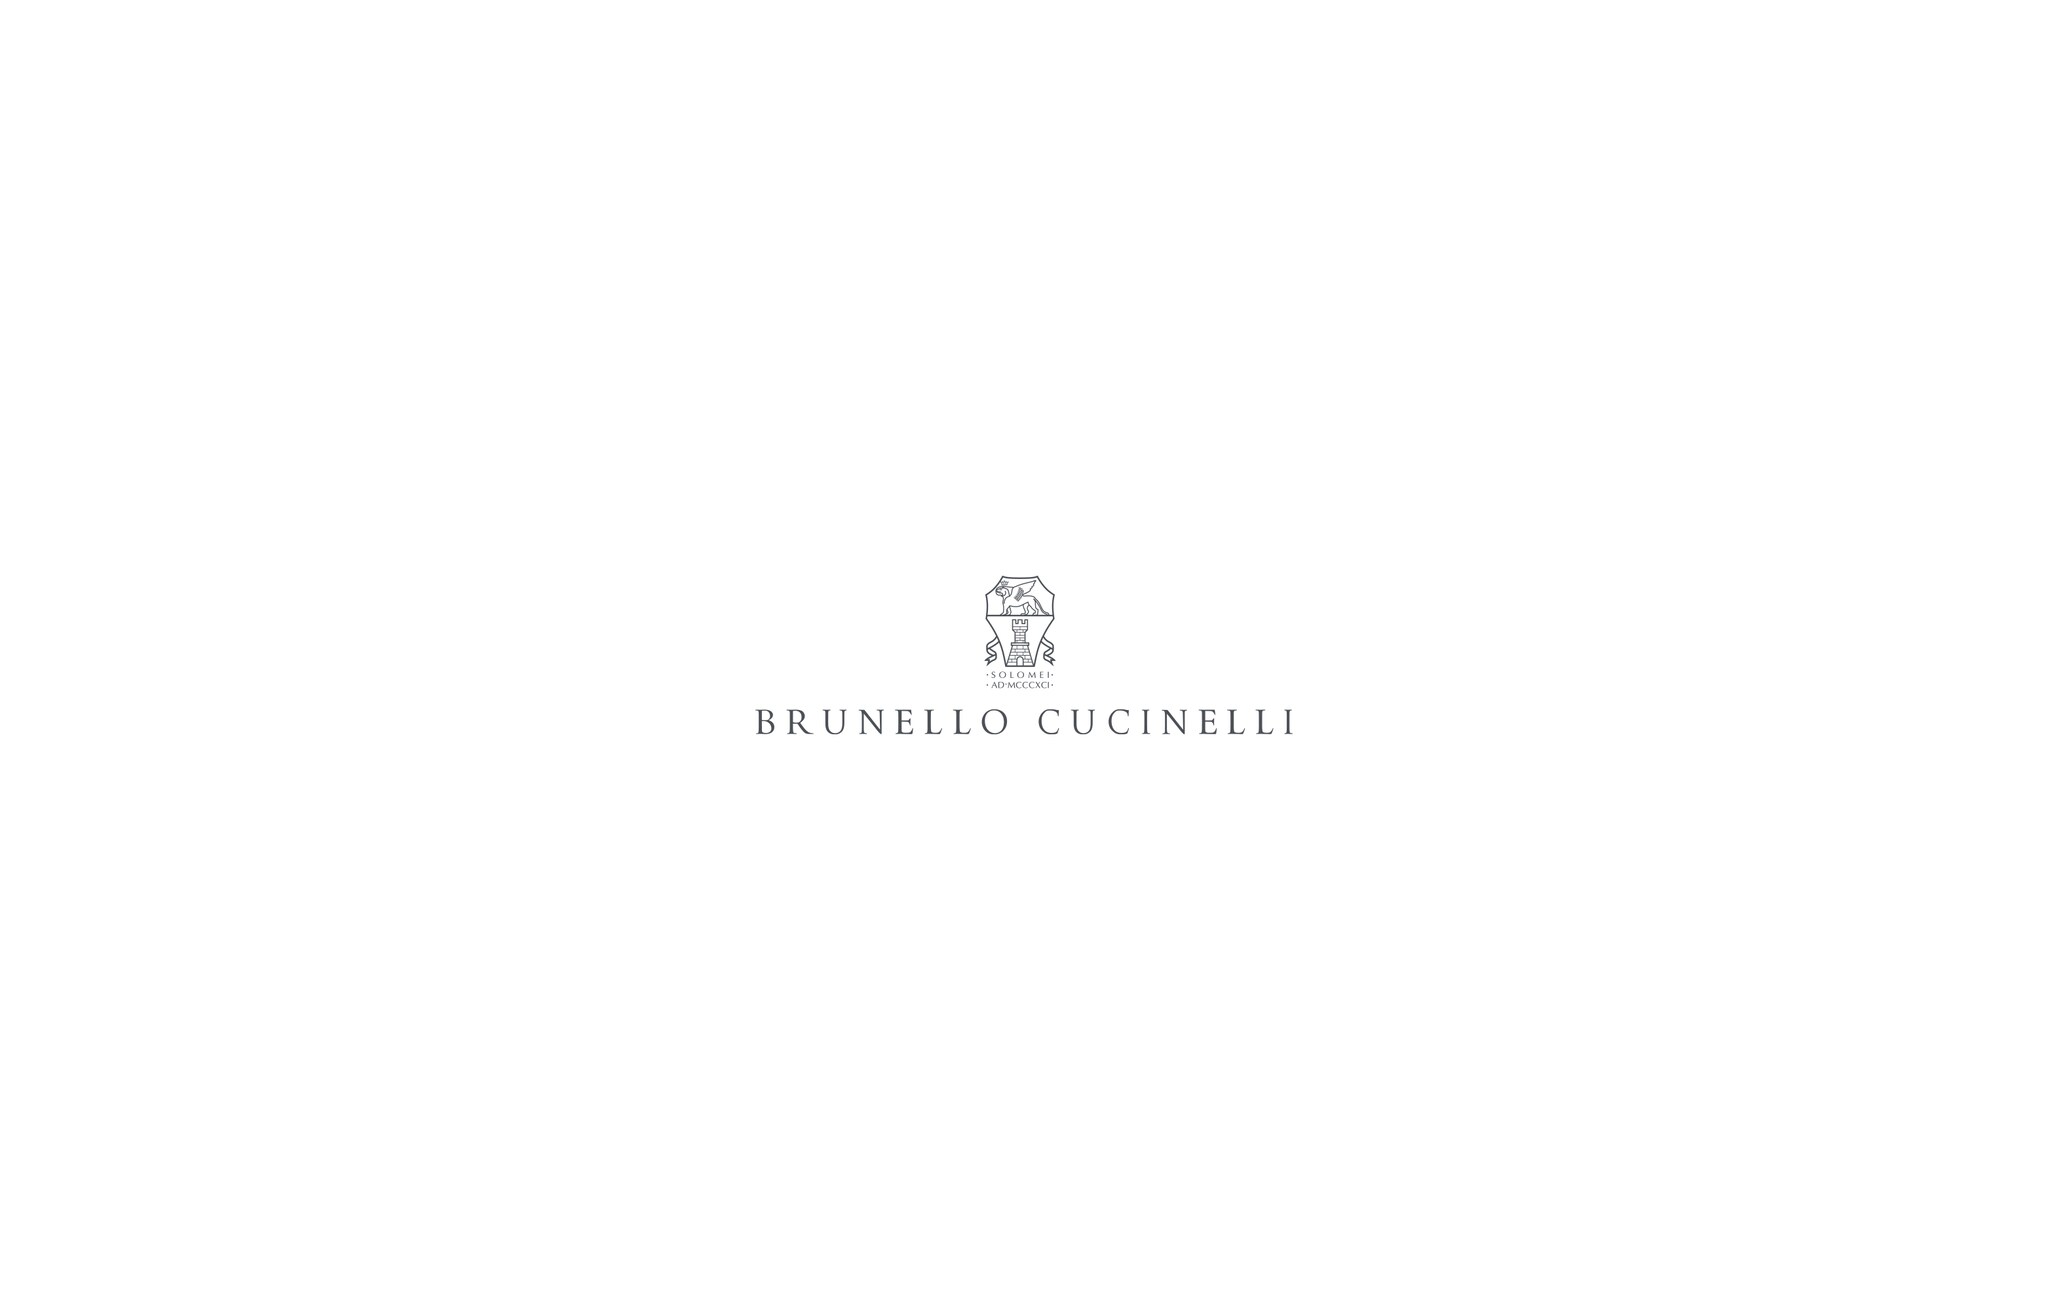  Wool, cashmere and silk sweater Cream Woman - Brunello Cucinelli 